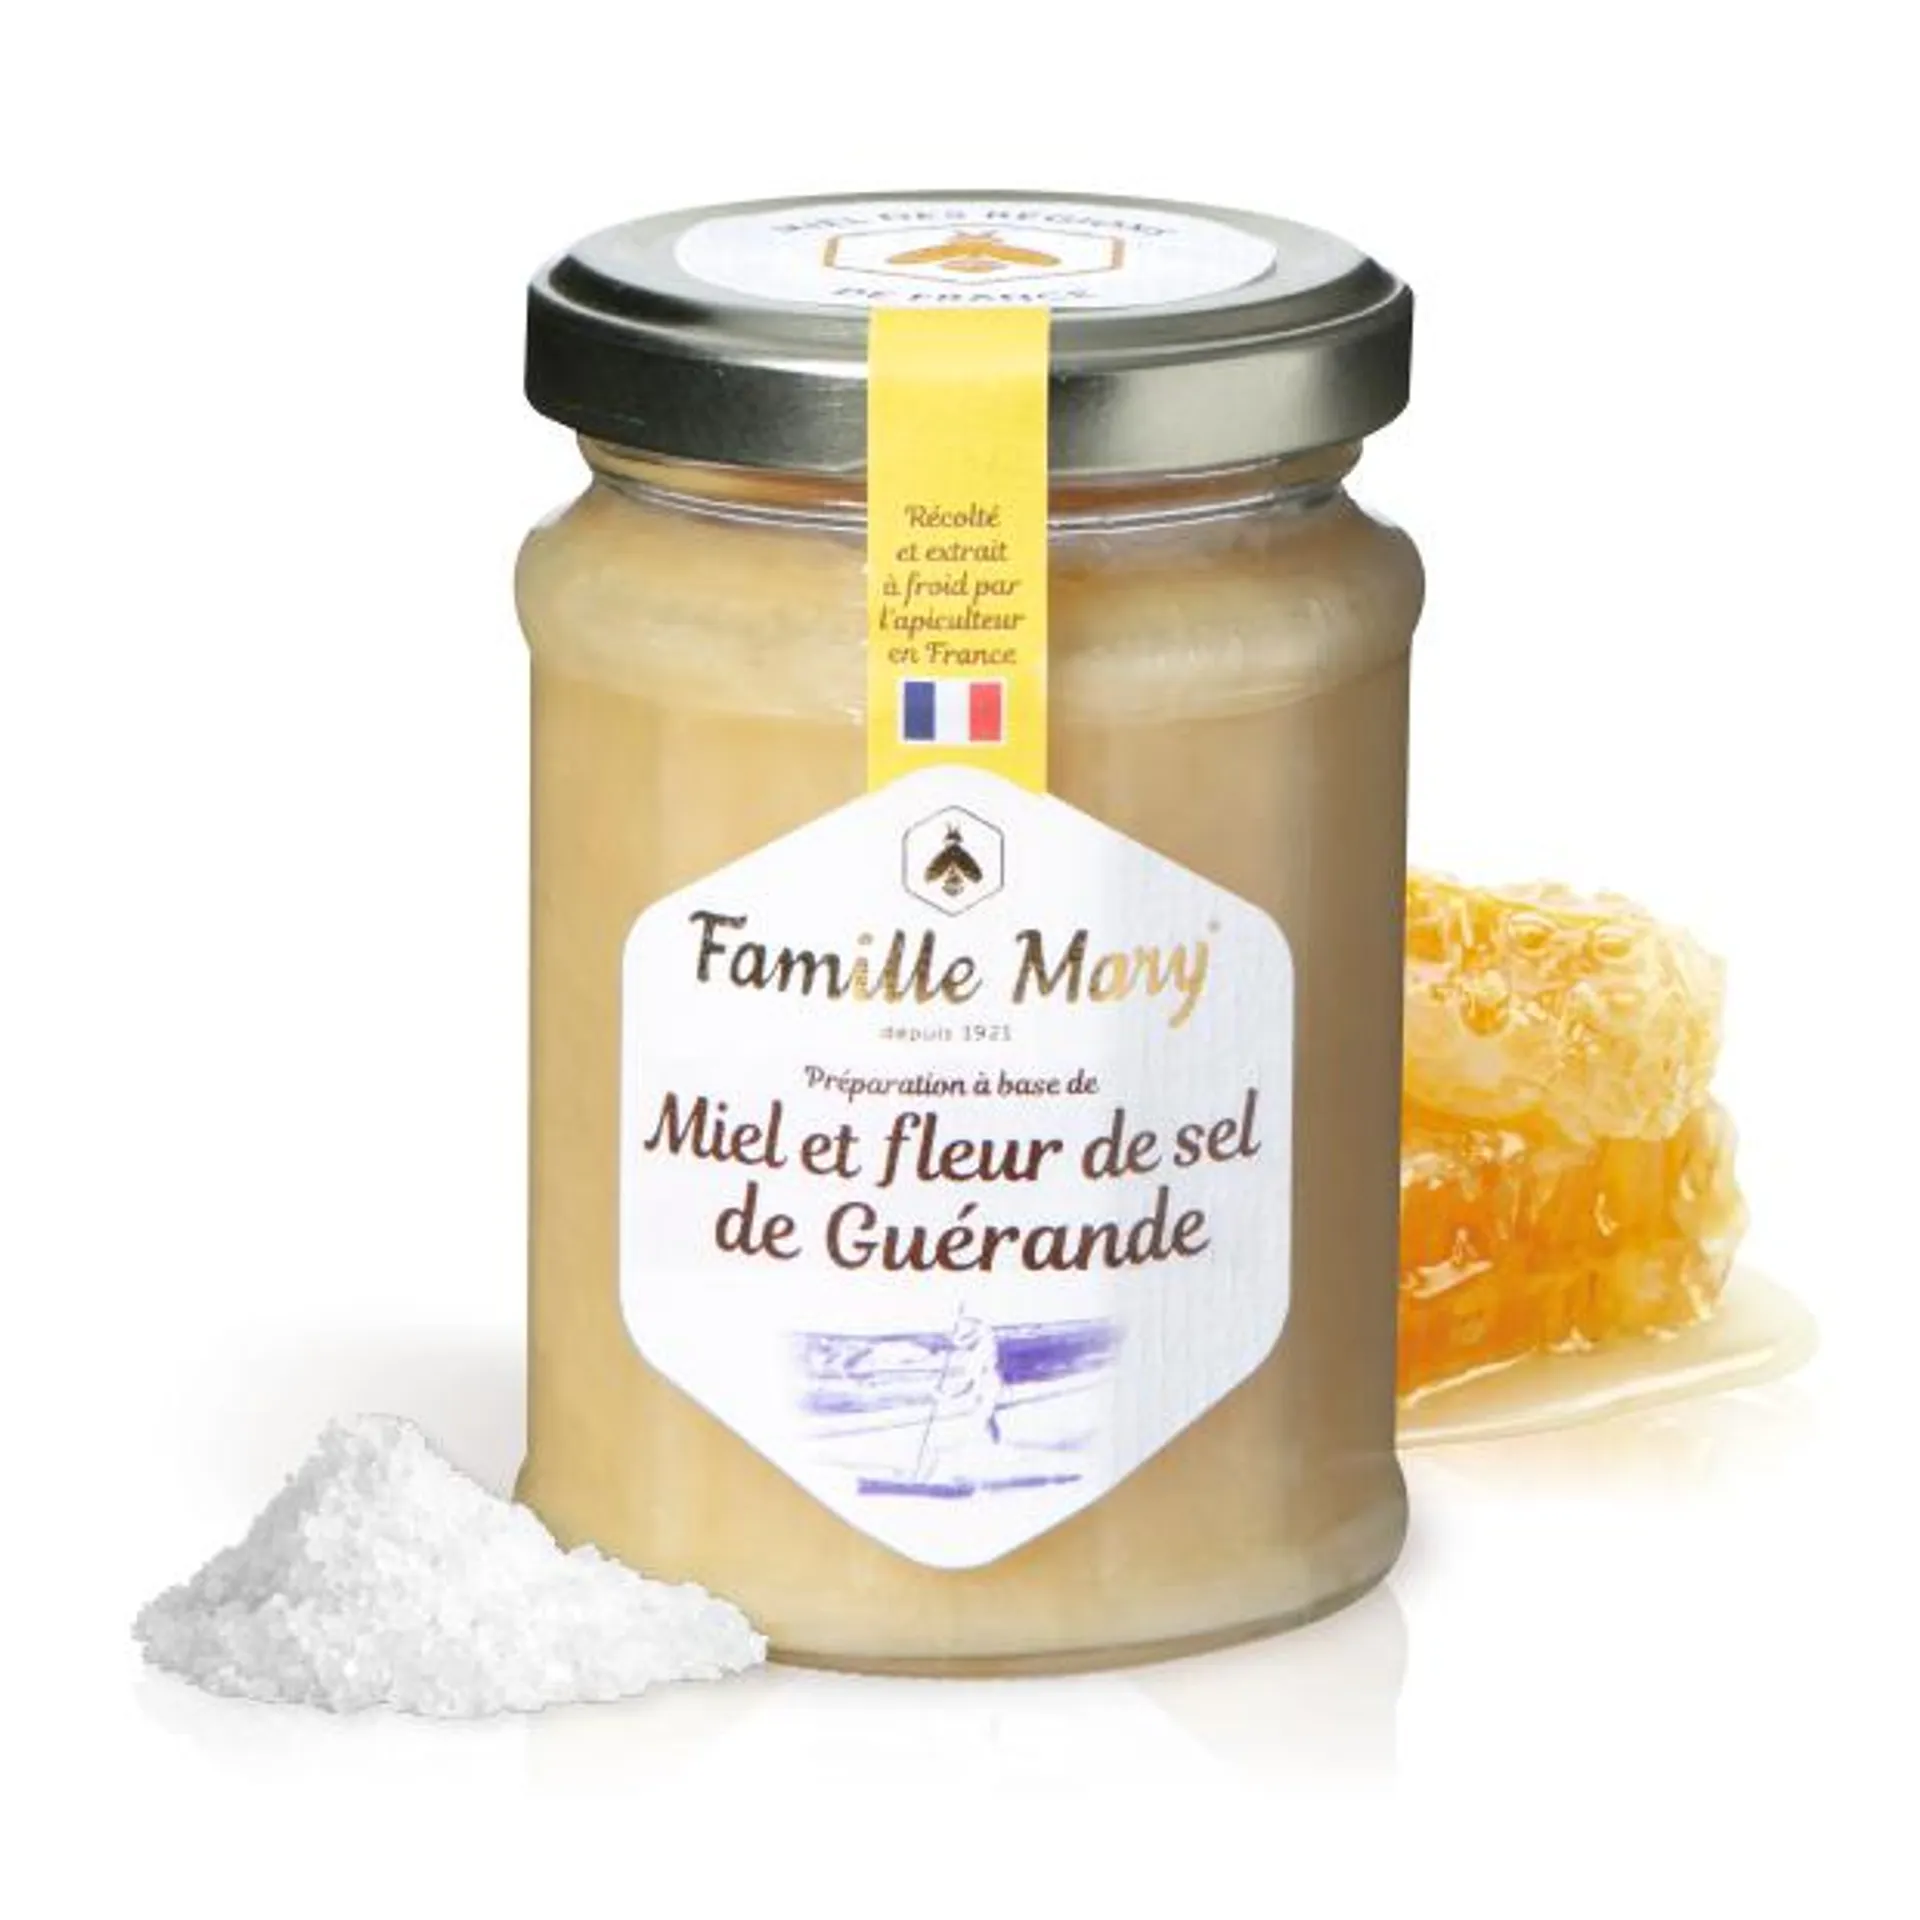 Miel & fleur de sel de Guérande